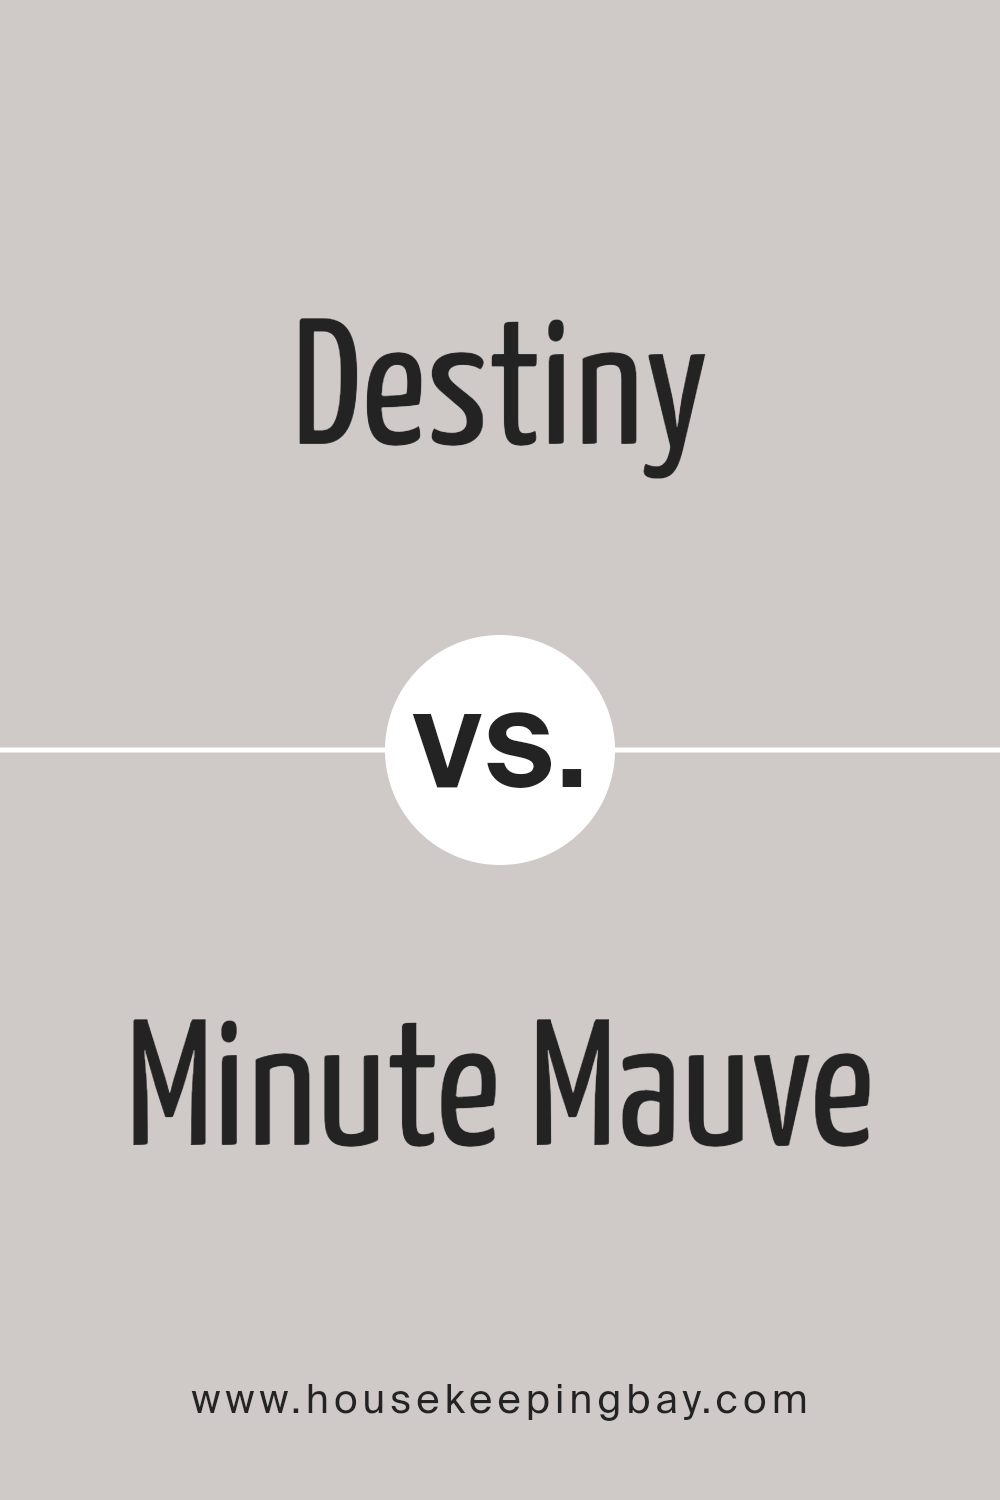 destiny_sw_6274_vs_minute_mauve_sw_7078